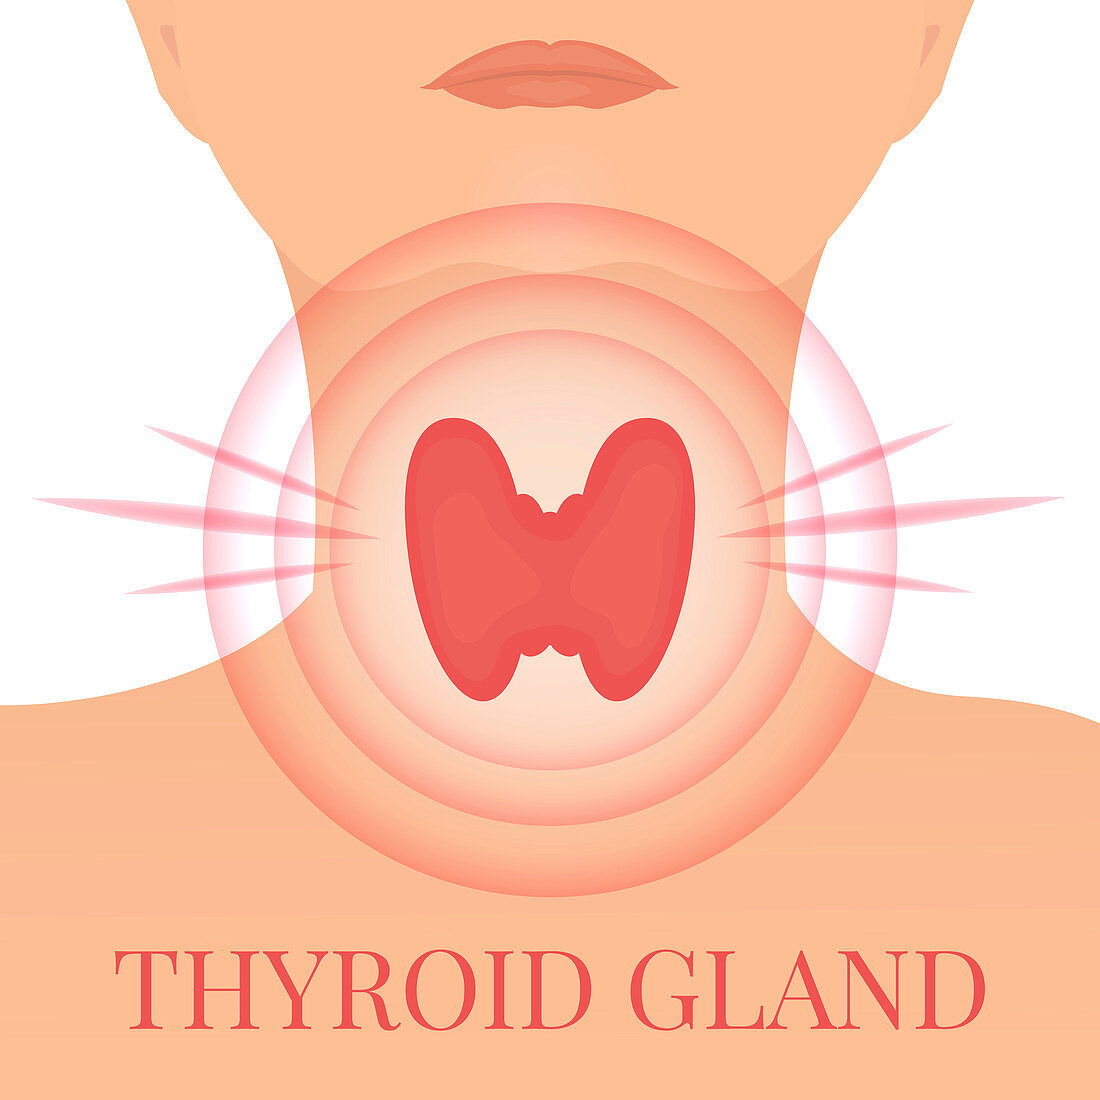 Thyroid gland disease, conceptual illustration